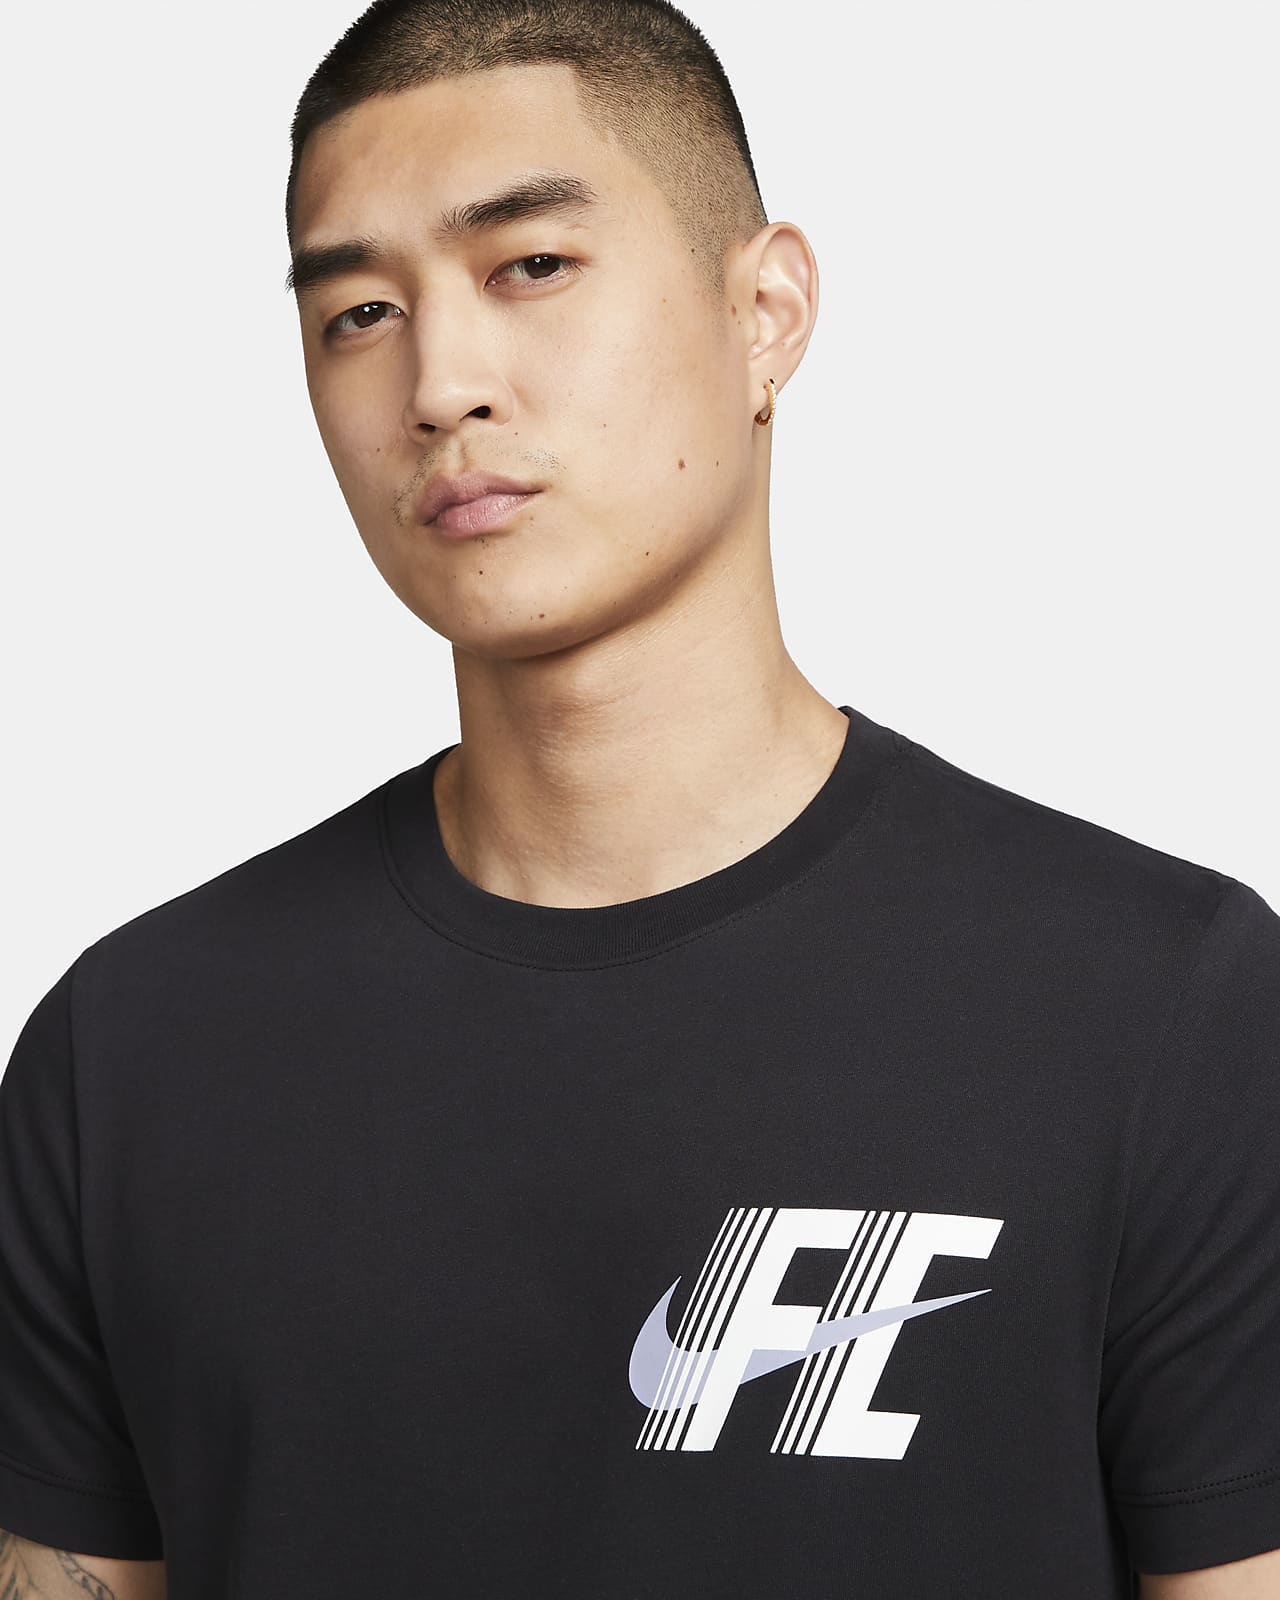 Nike F.C. Men's Nike Dri-FIT Football T-Shirt.